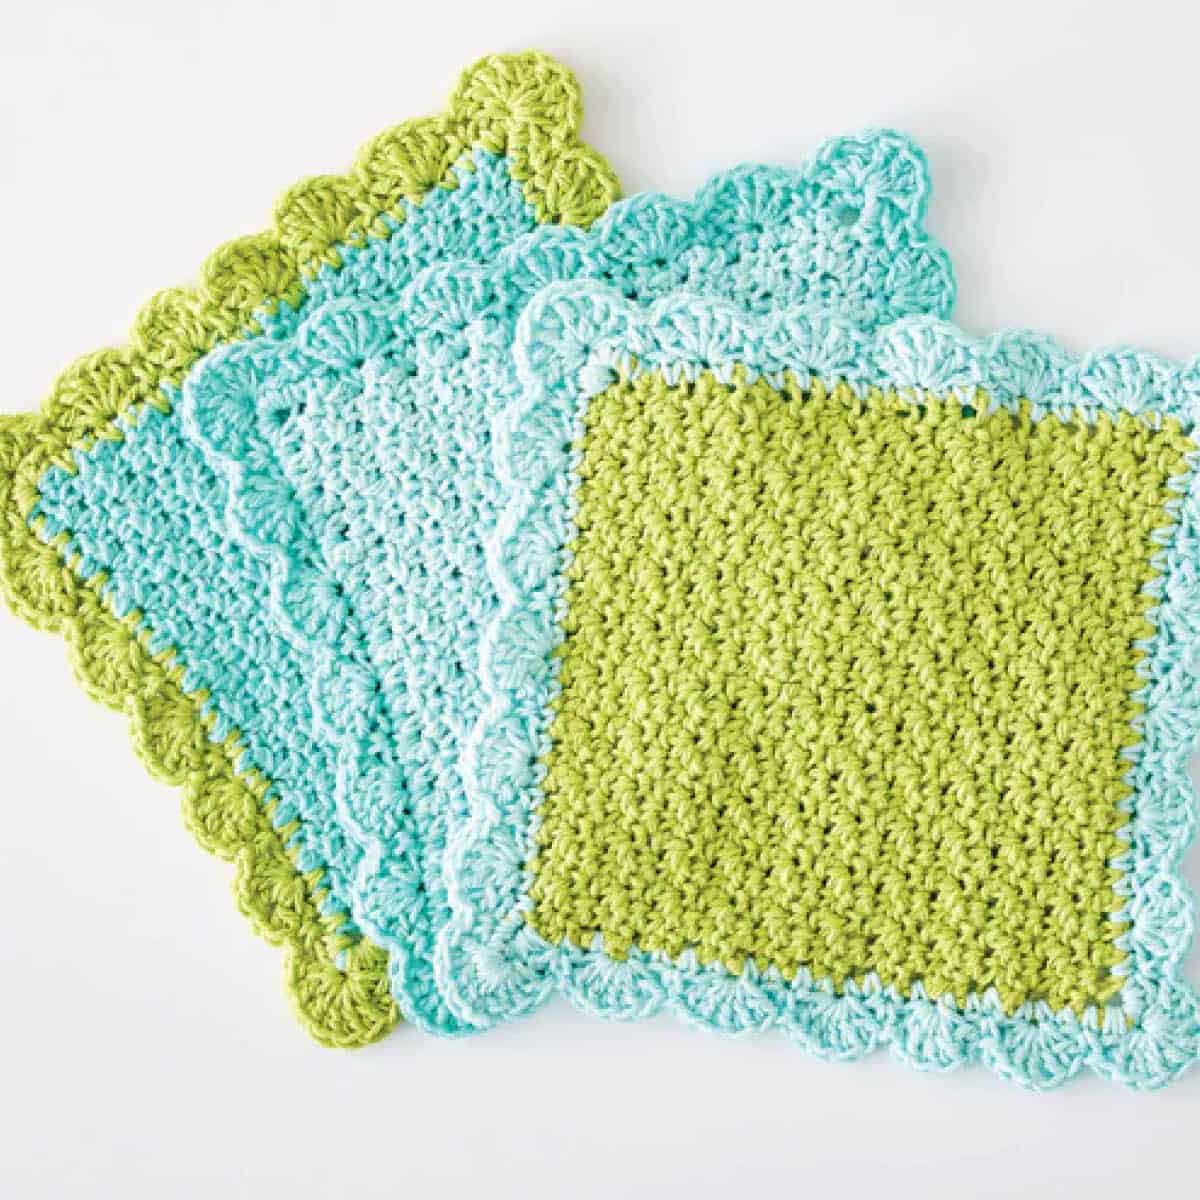 Crochet Scalloped Dishcloth Pattern